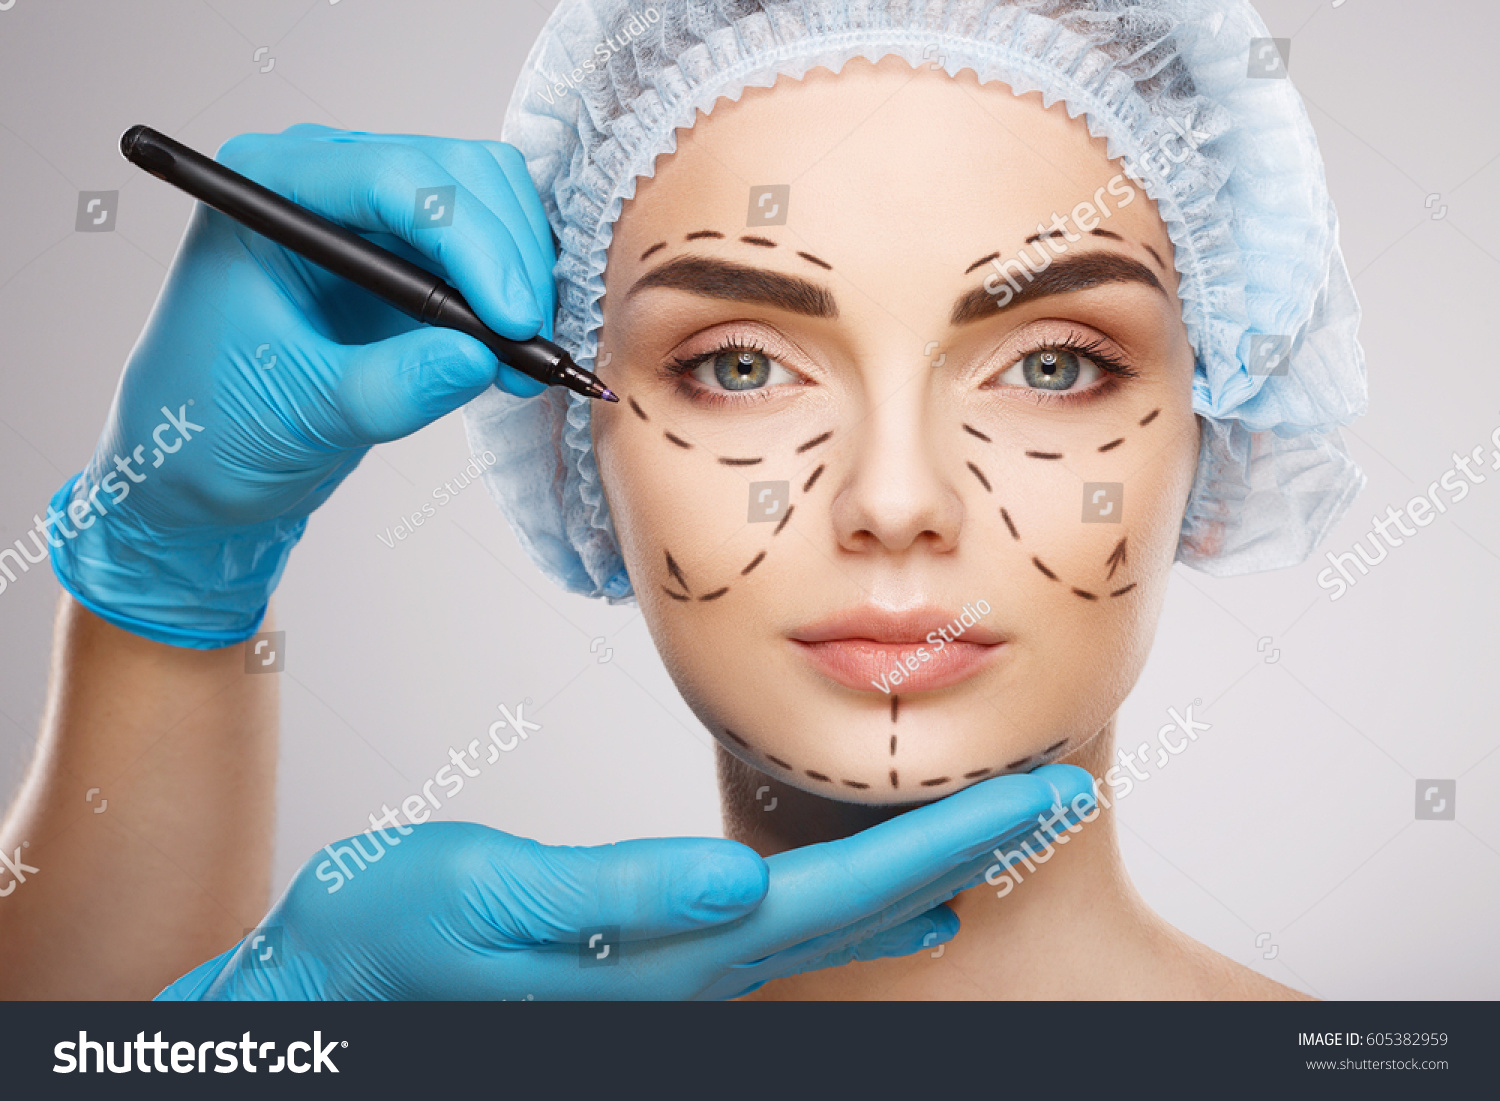 Medical term for facial surgery